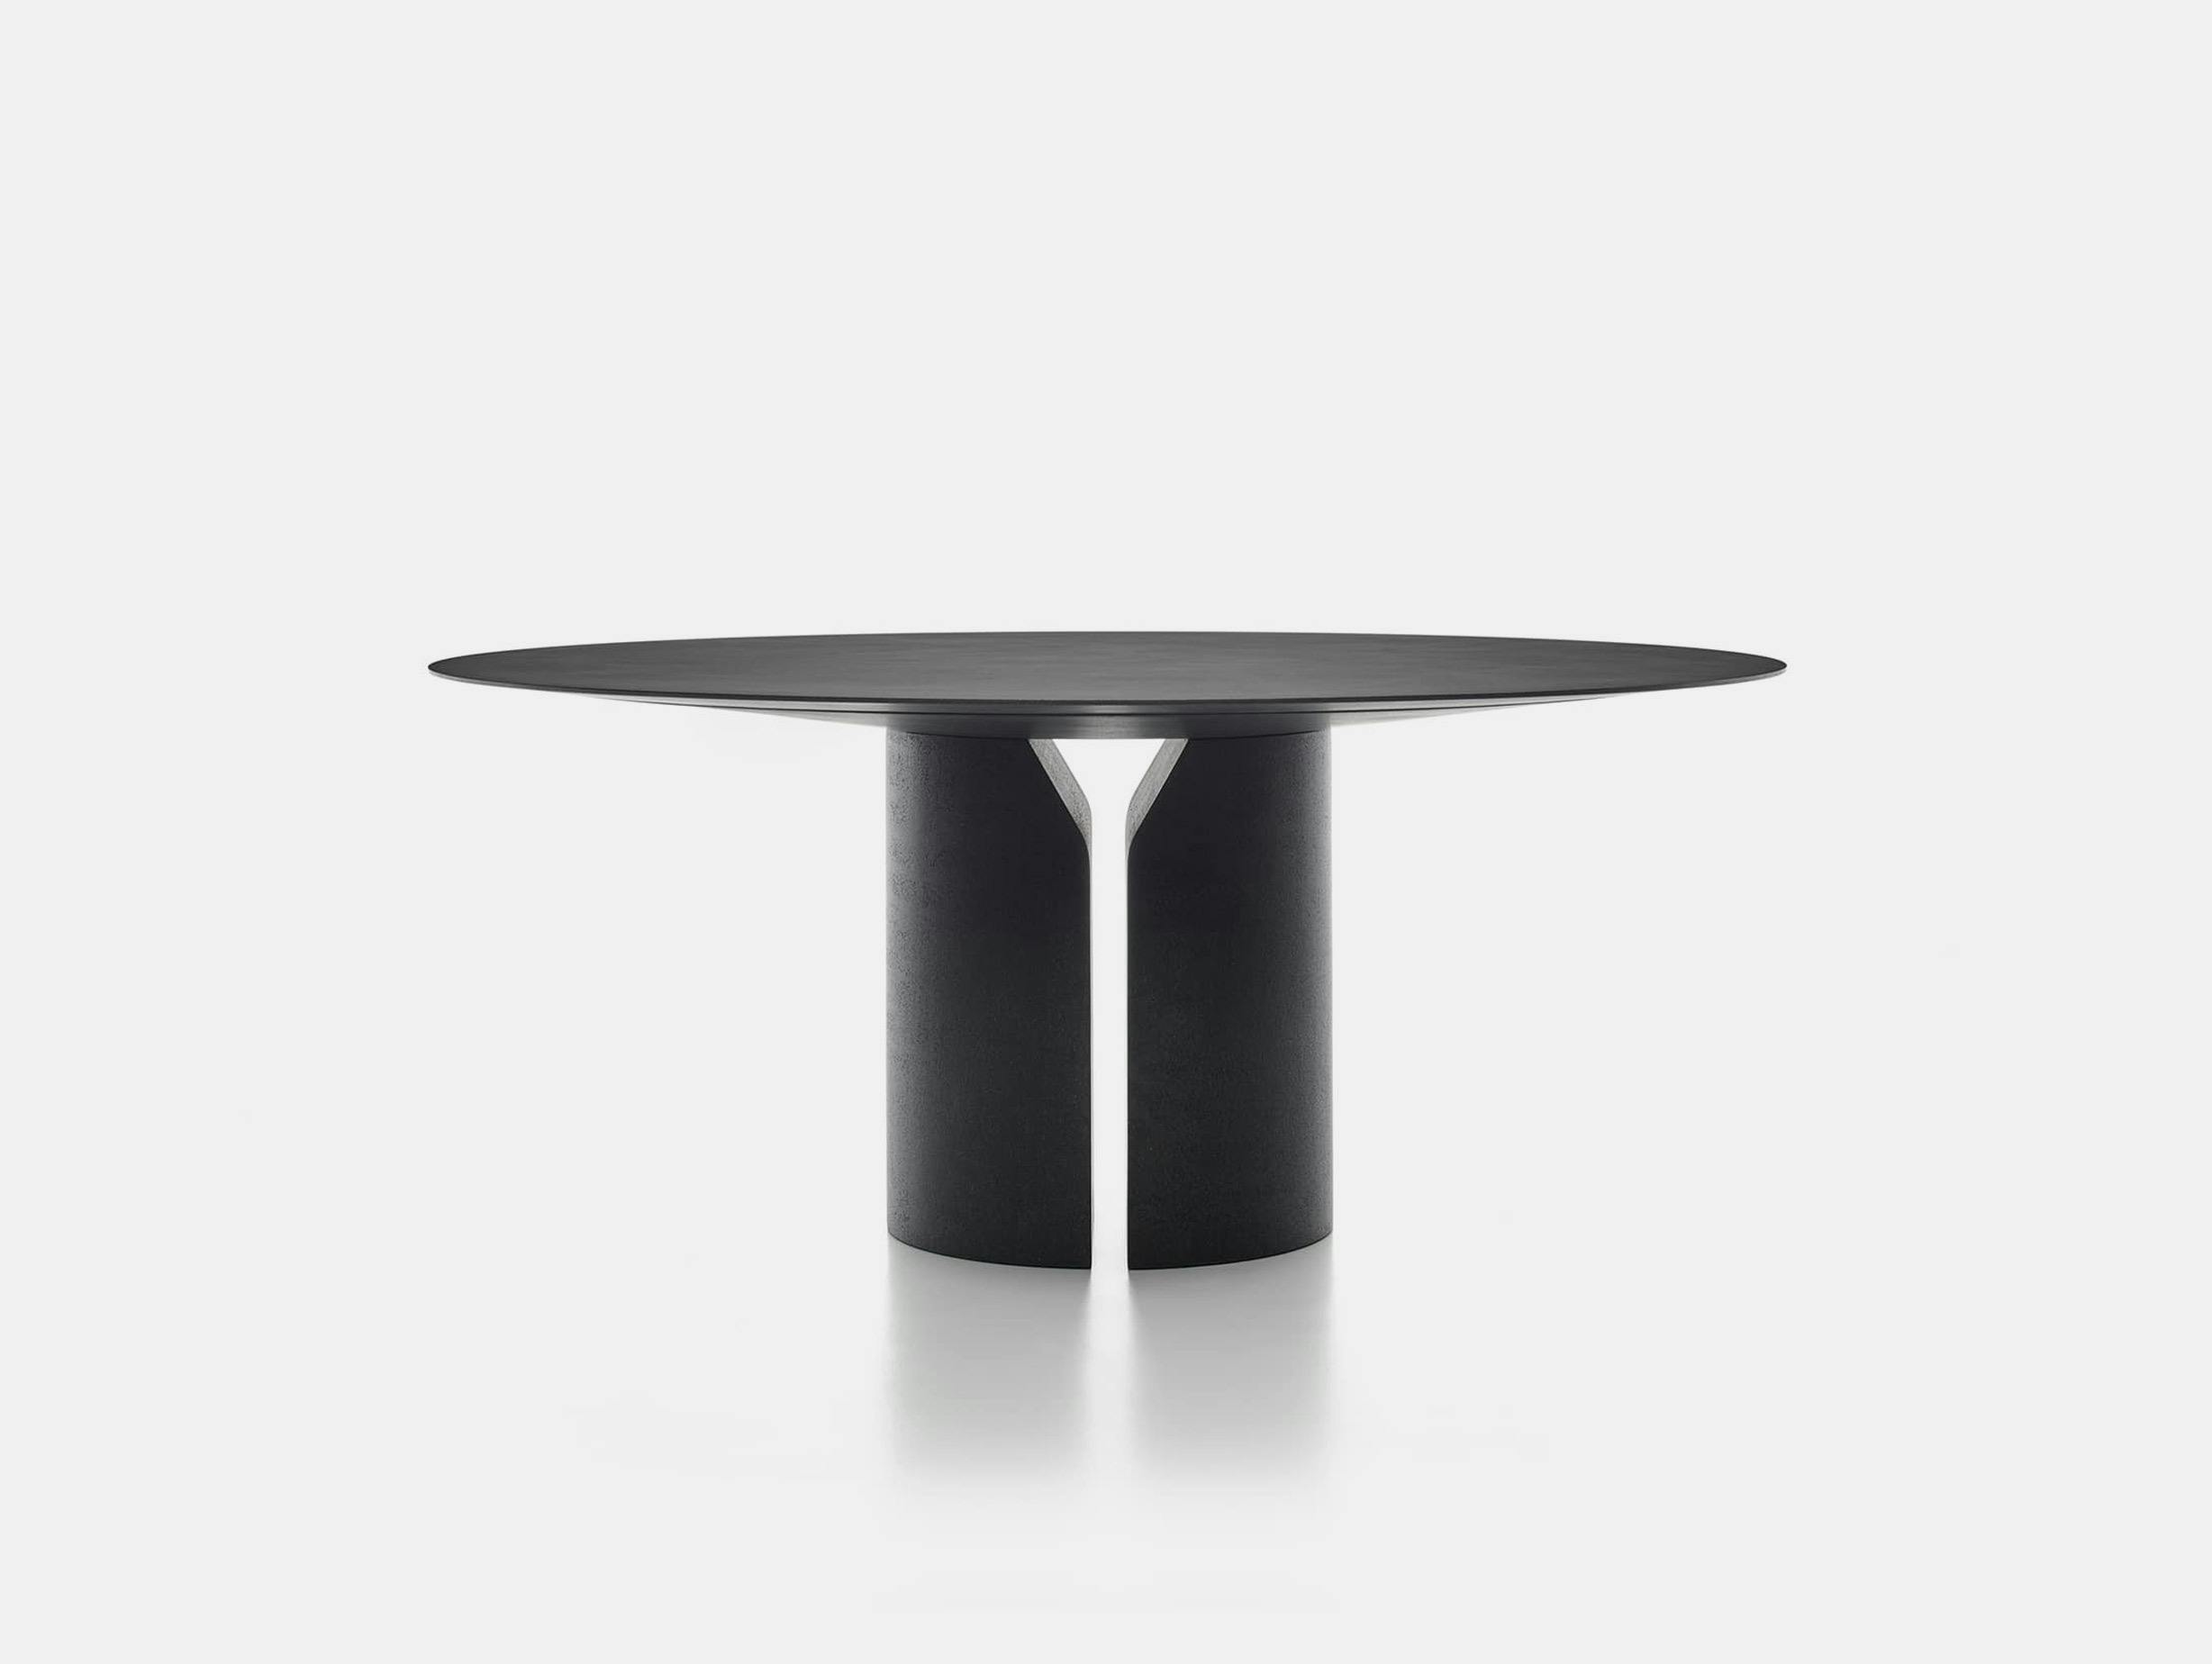 Mdf italia Jean Nouvel Design ndf table round stone black ebony